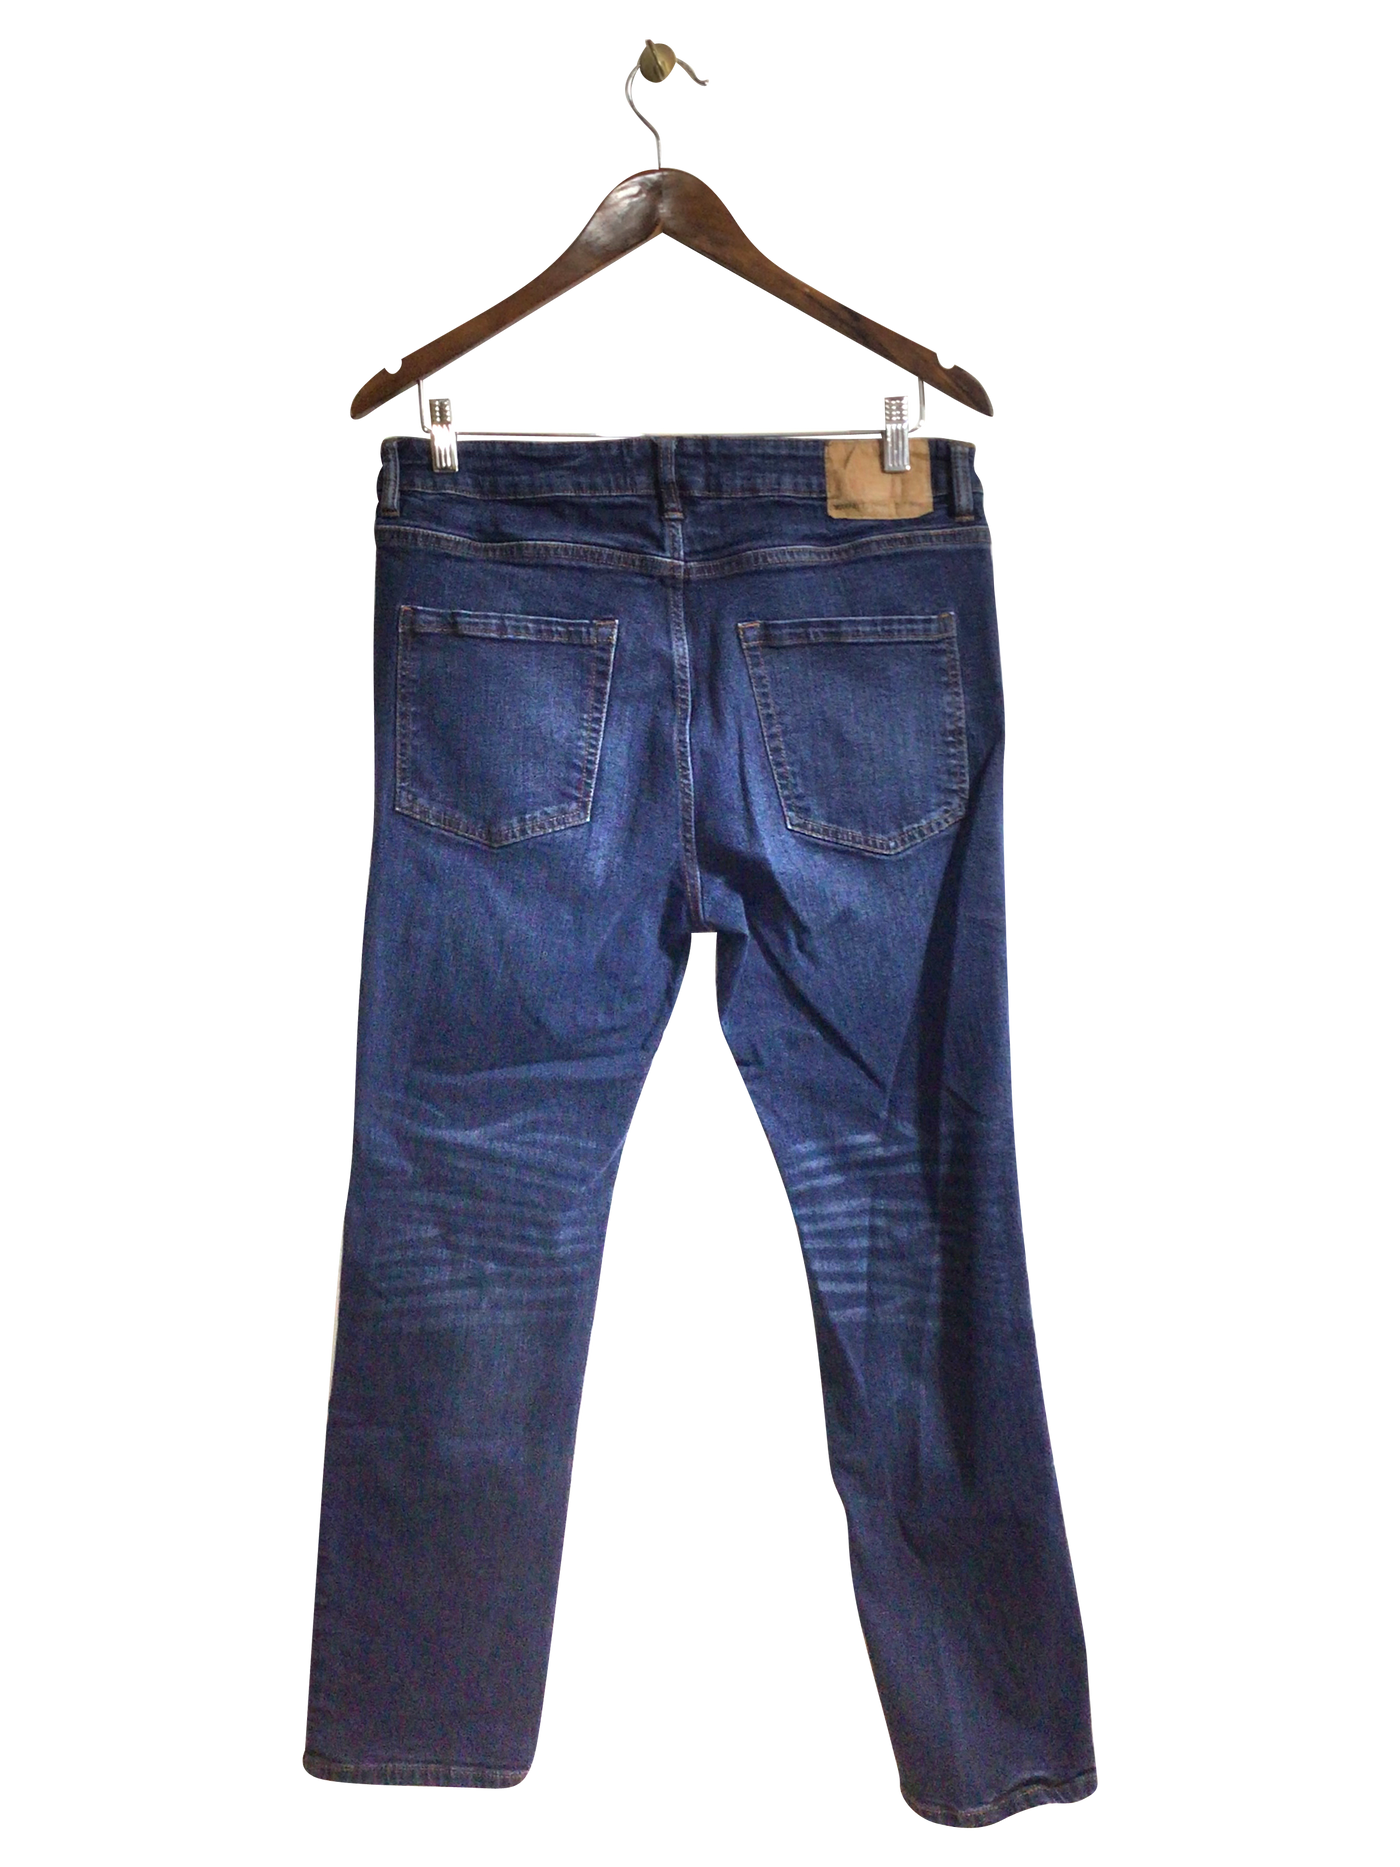 BLUENOTES Women Straight-Legged Jeans Regular fit in Blue - Size 34x32 | 13.4 $ KOOP